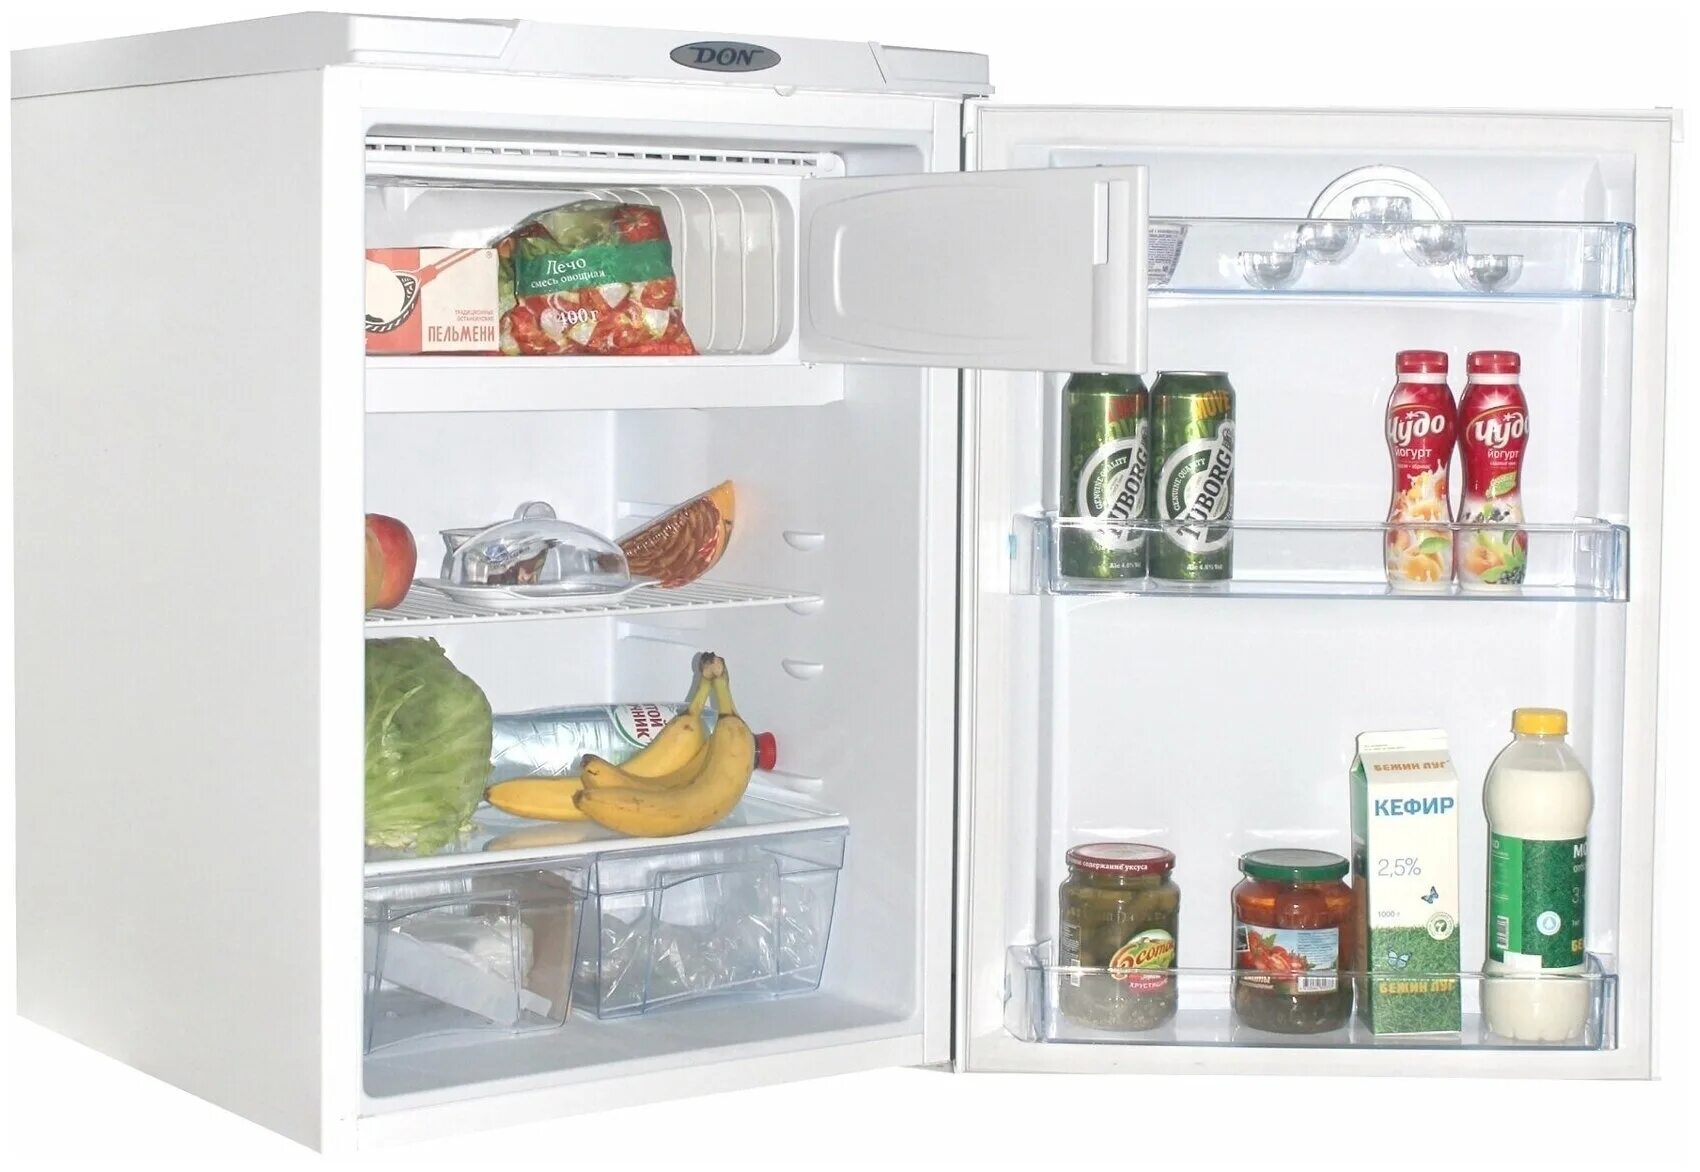 Дон холодильник ру. Холодильник однокамерный don r 405 g. Холодильник don r 405 001 b. Холодильник don r 405 графит. Холодильник don r-405 g графит.